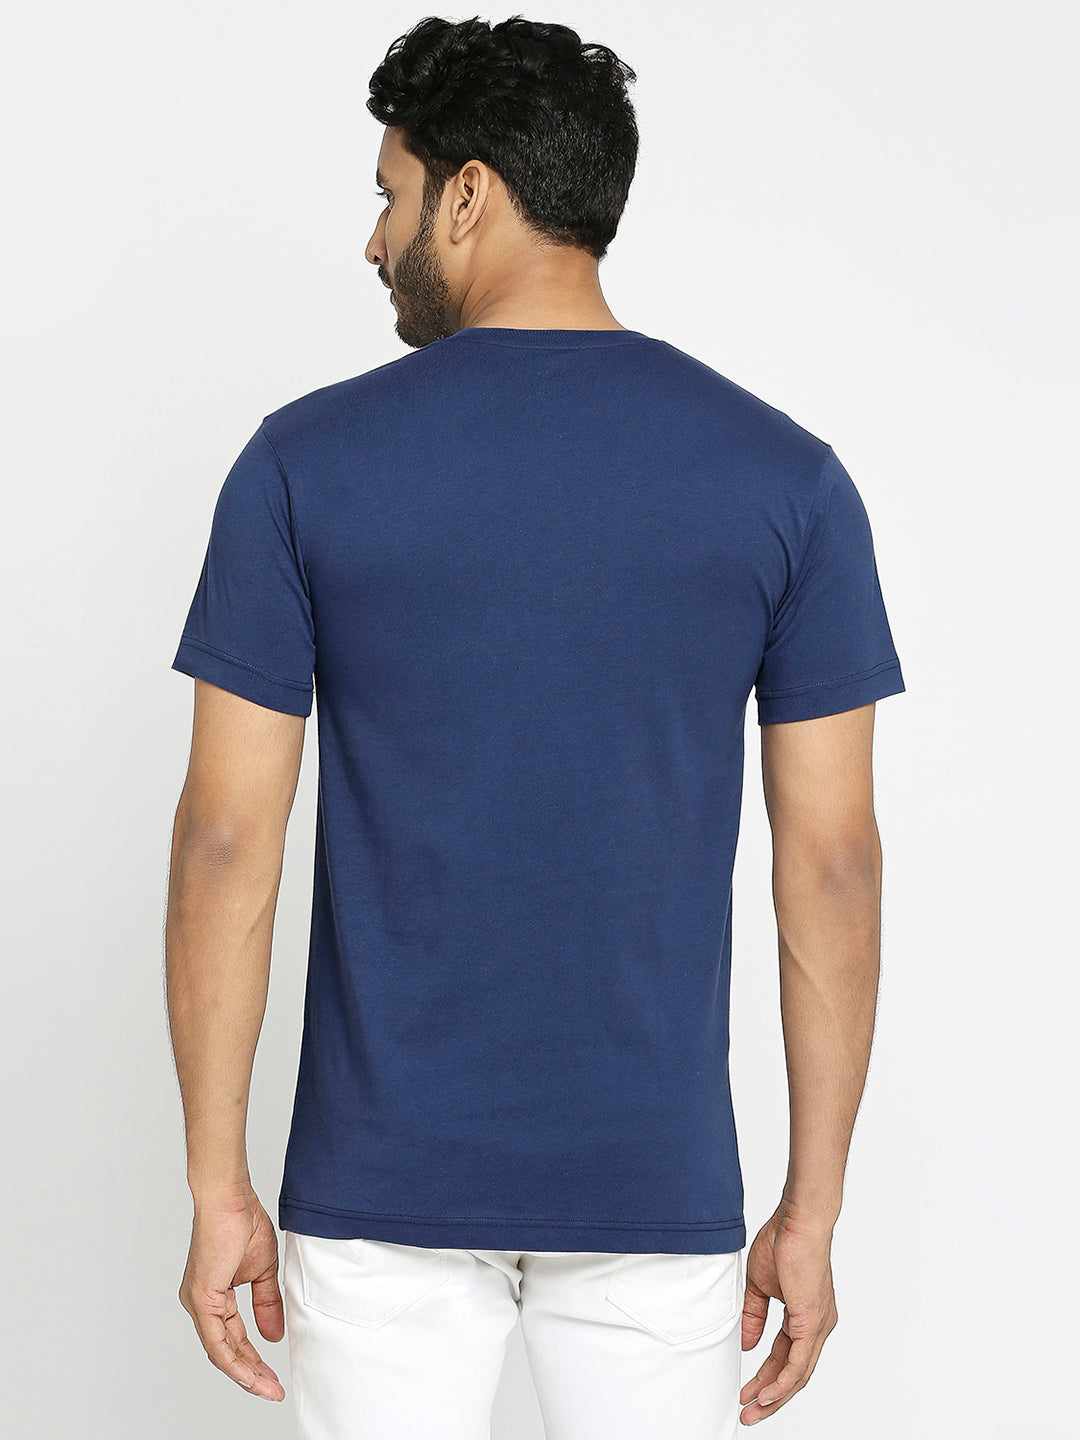 VIP Mens Navy Colour Blue Round Neck T-Shirt